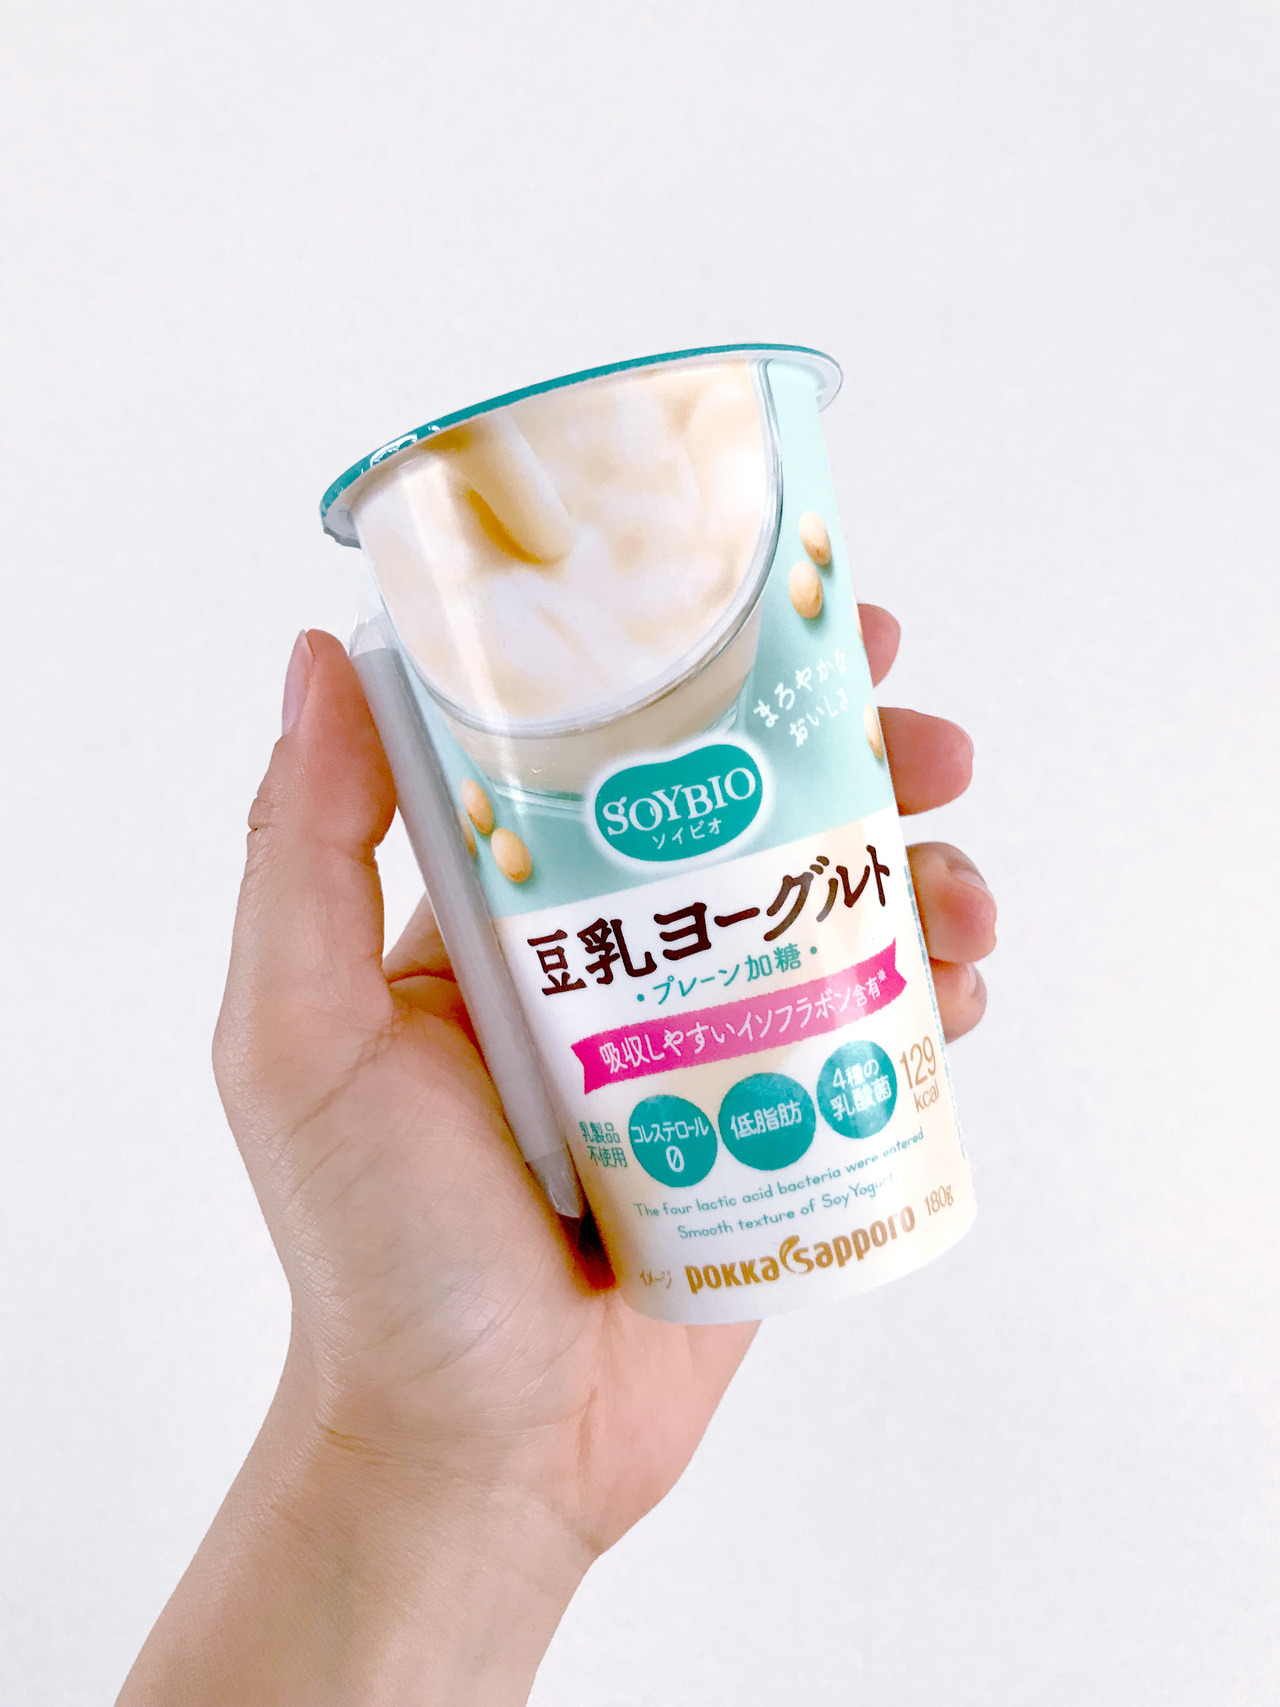 Yoghurt Pokka Sapporo Soybio 豆乳ヨーグルト プレーン加糖